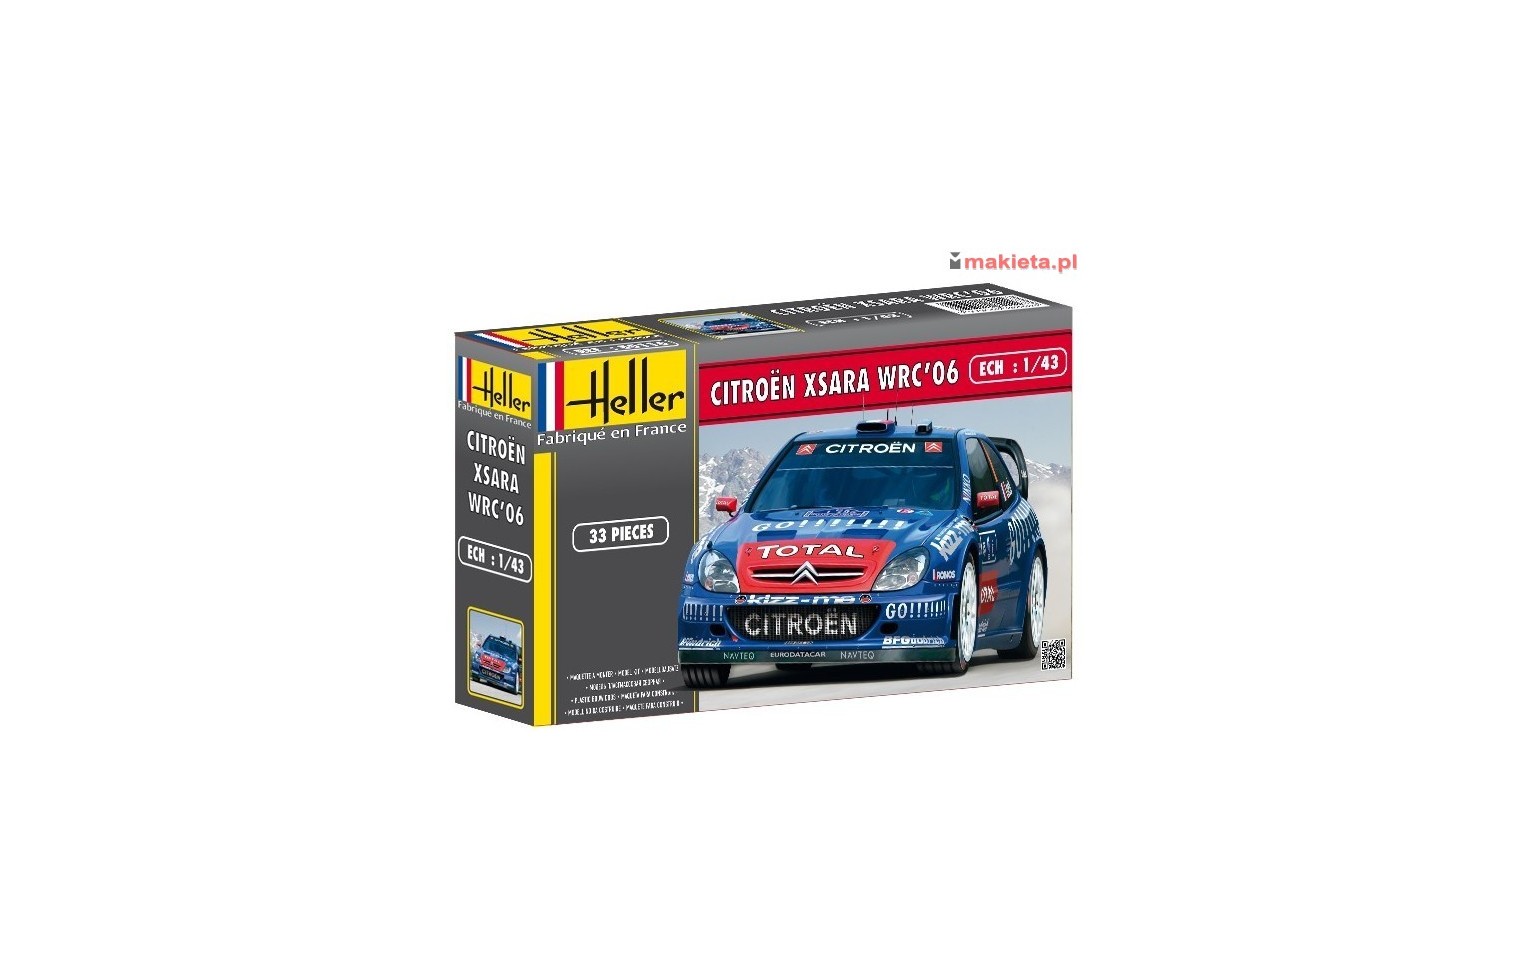 Heller 80116, Citroen Xsara WRC '06, skala 1:43